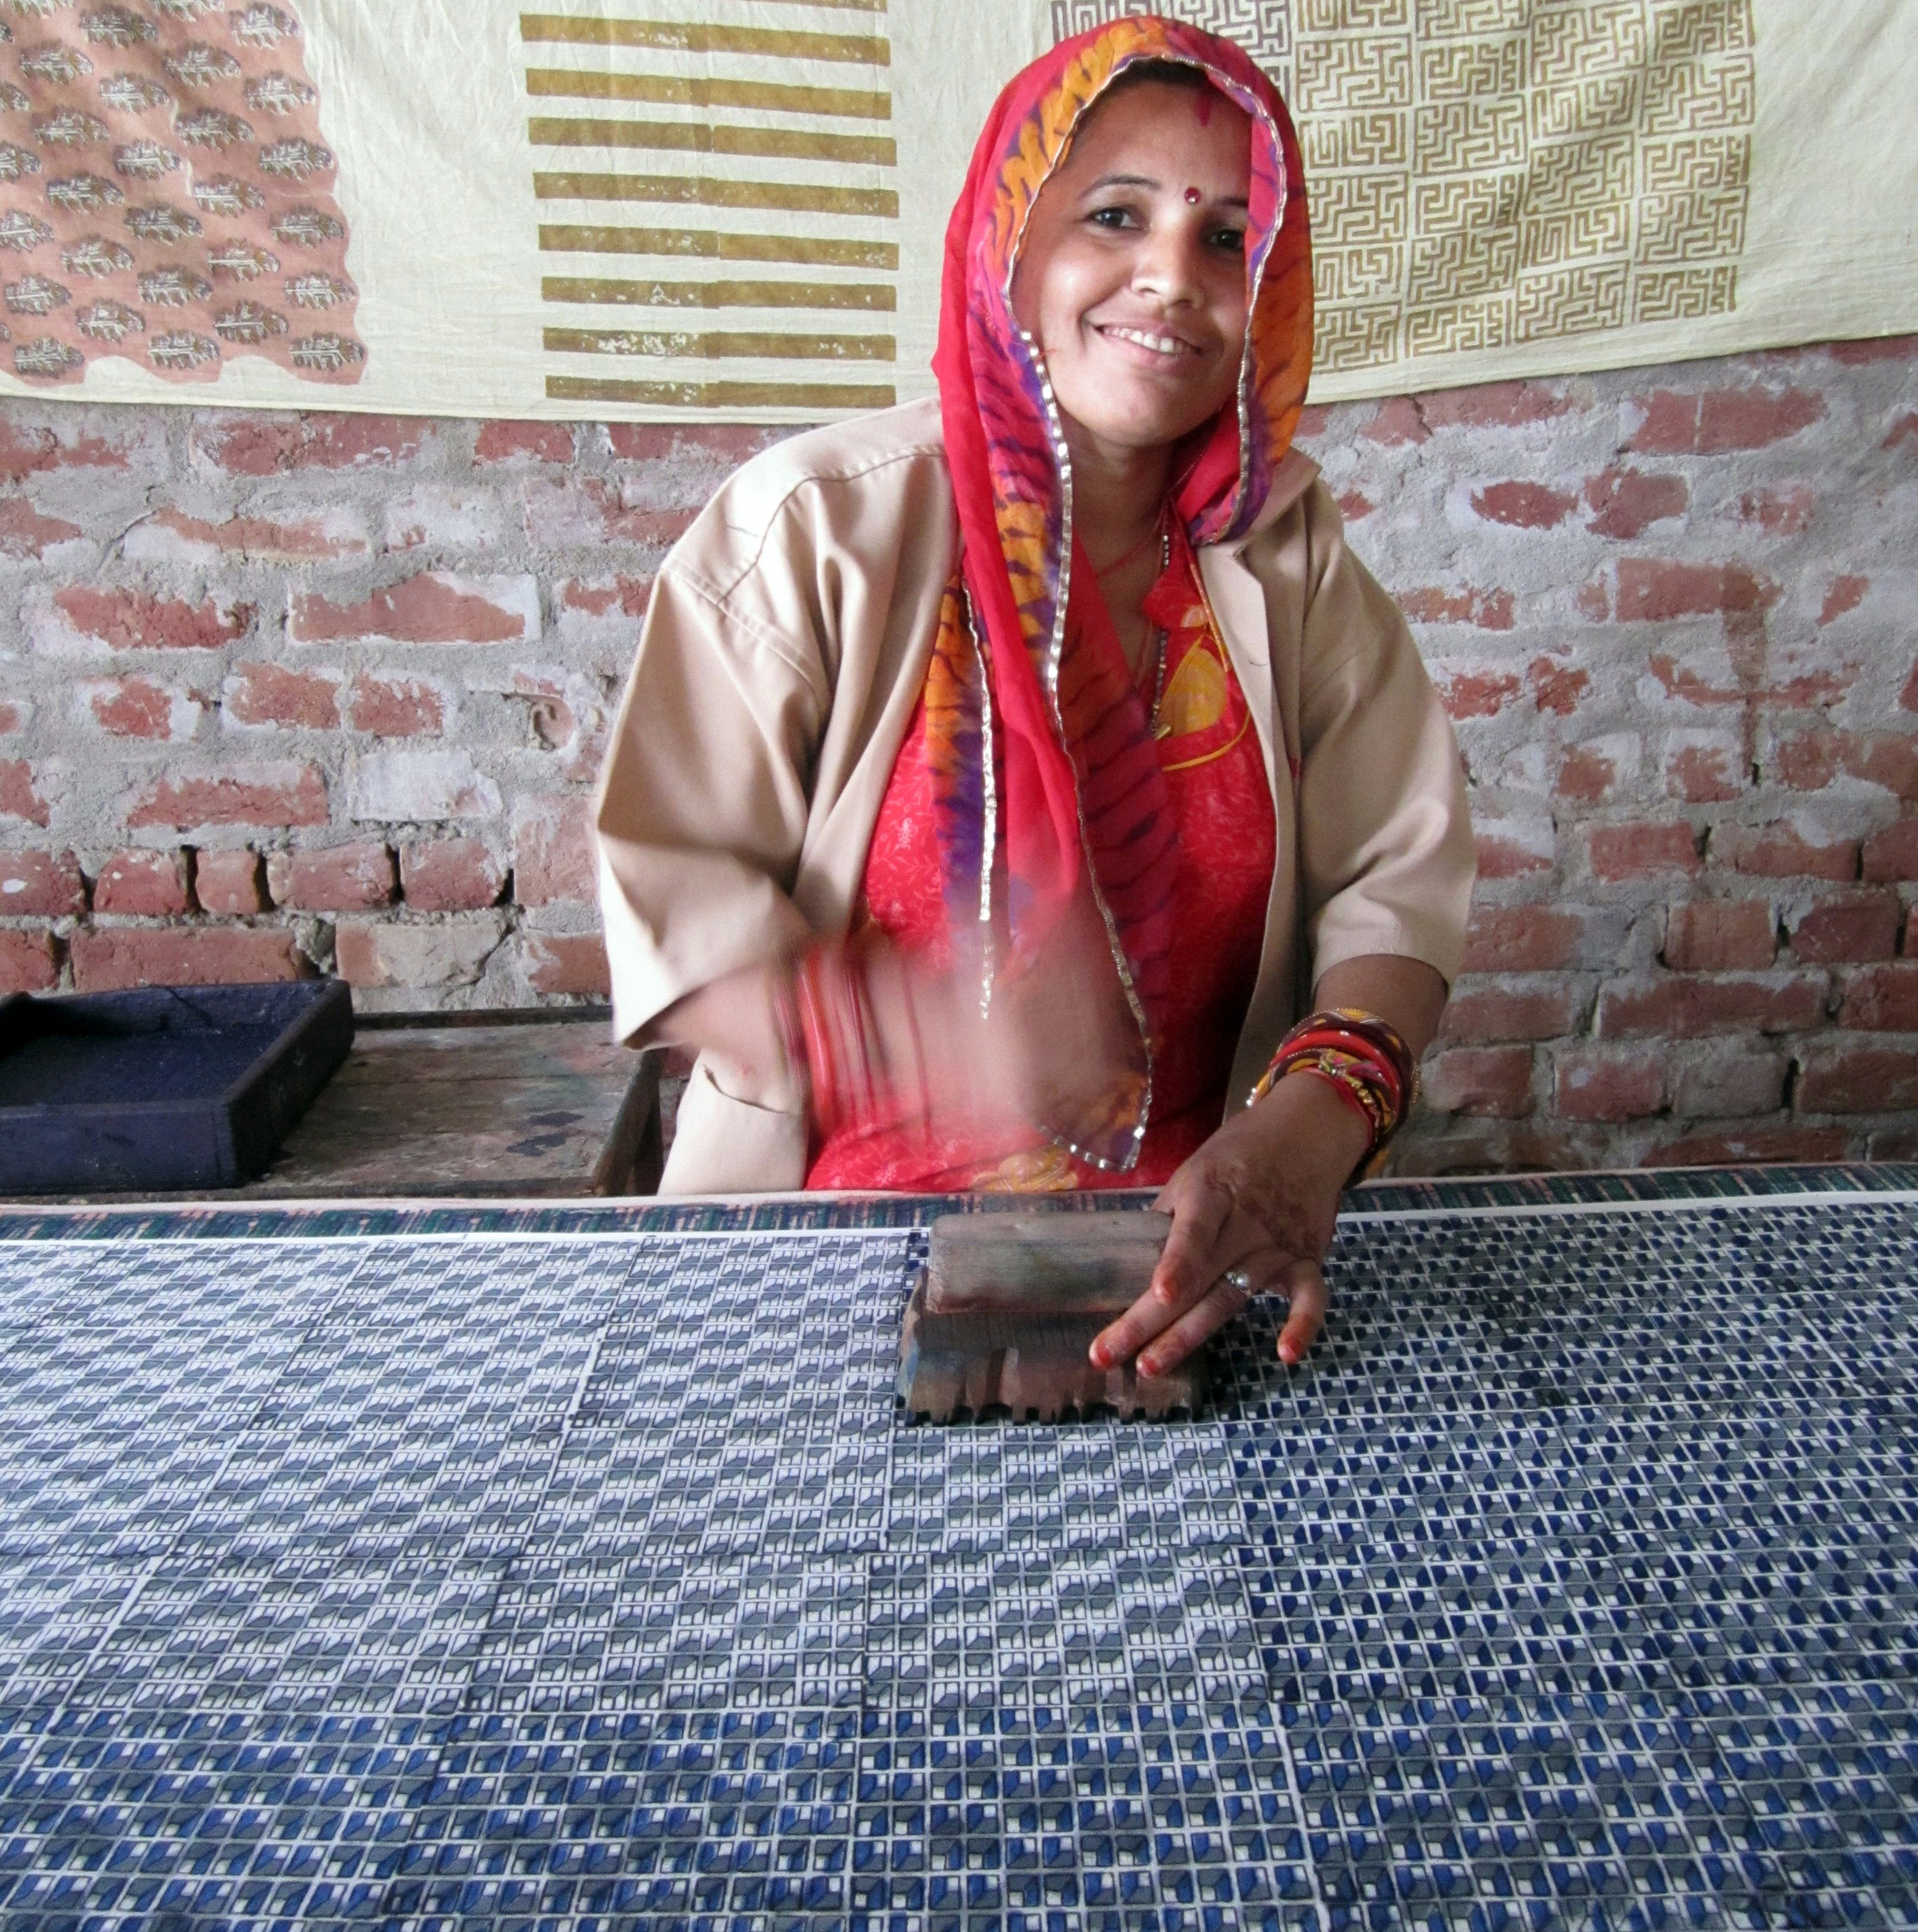 A Woman Indian Wood Block Printer